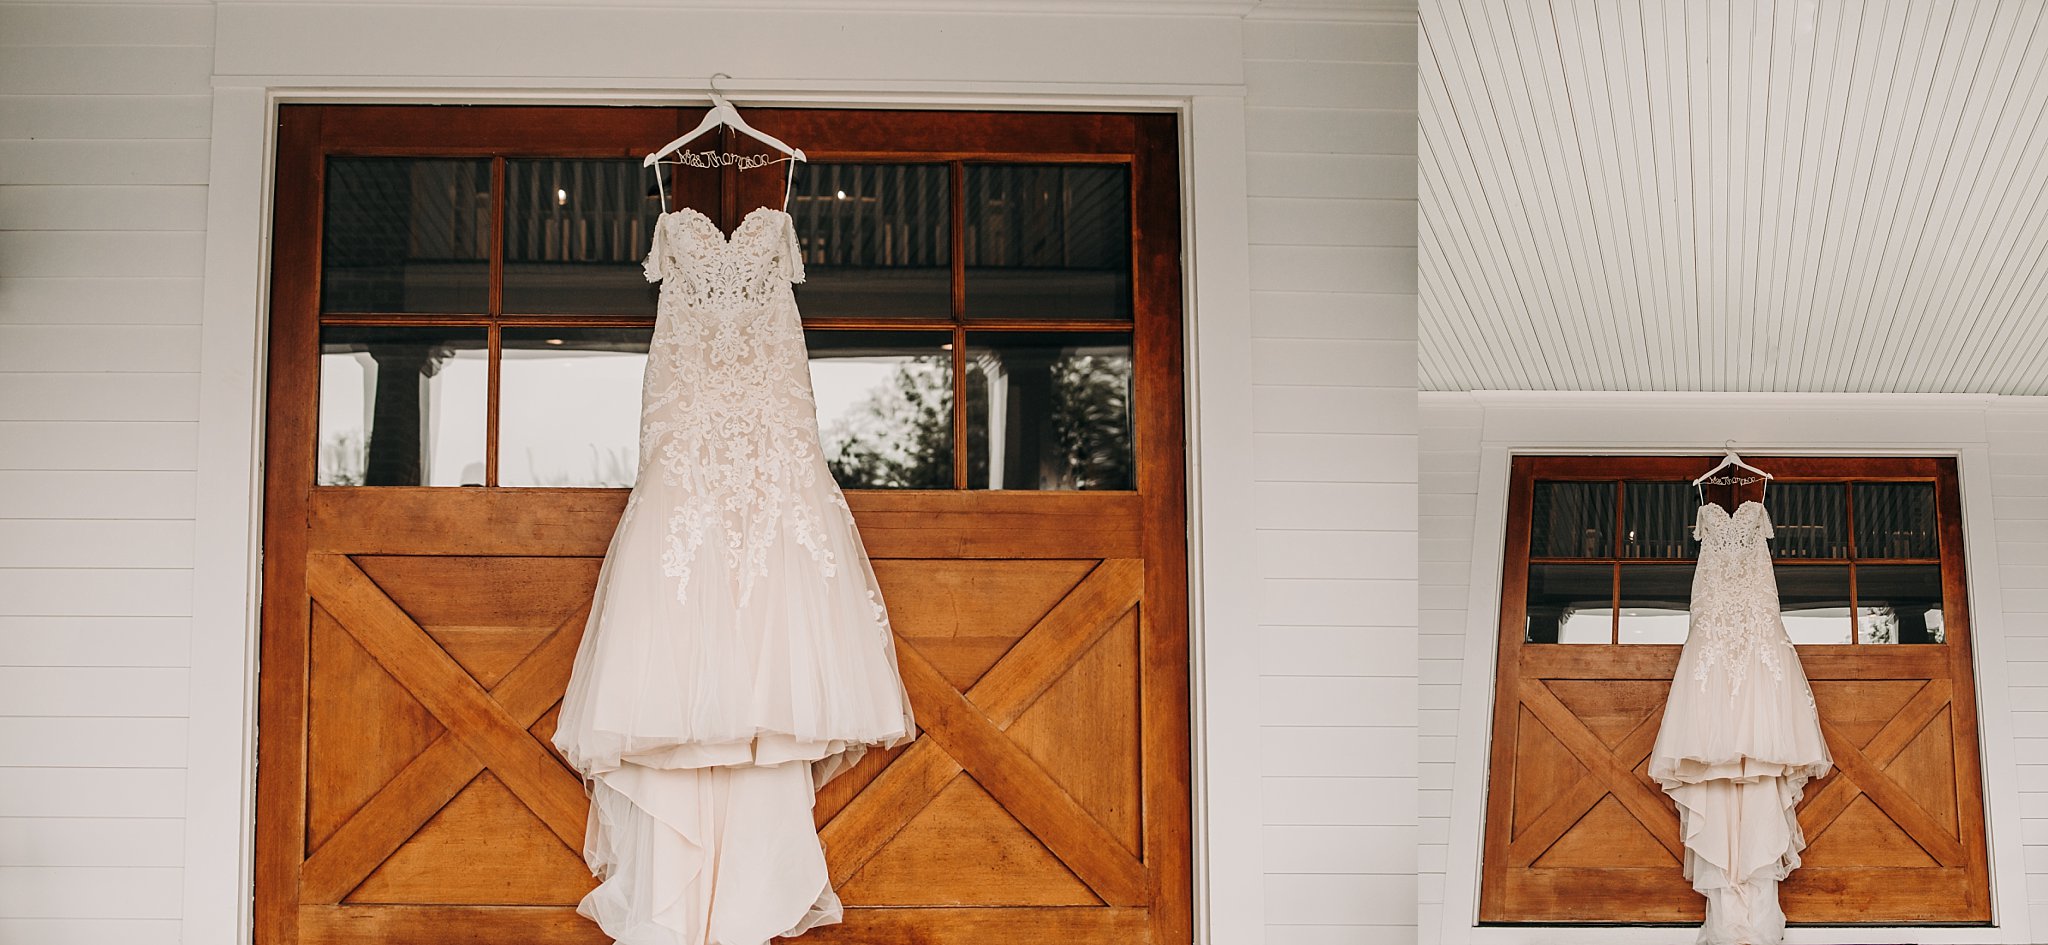 The Thompson S Elegant Southern Wedding White Oak Road Farm In Appling Ga Jmichellephotographyga Com